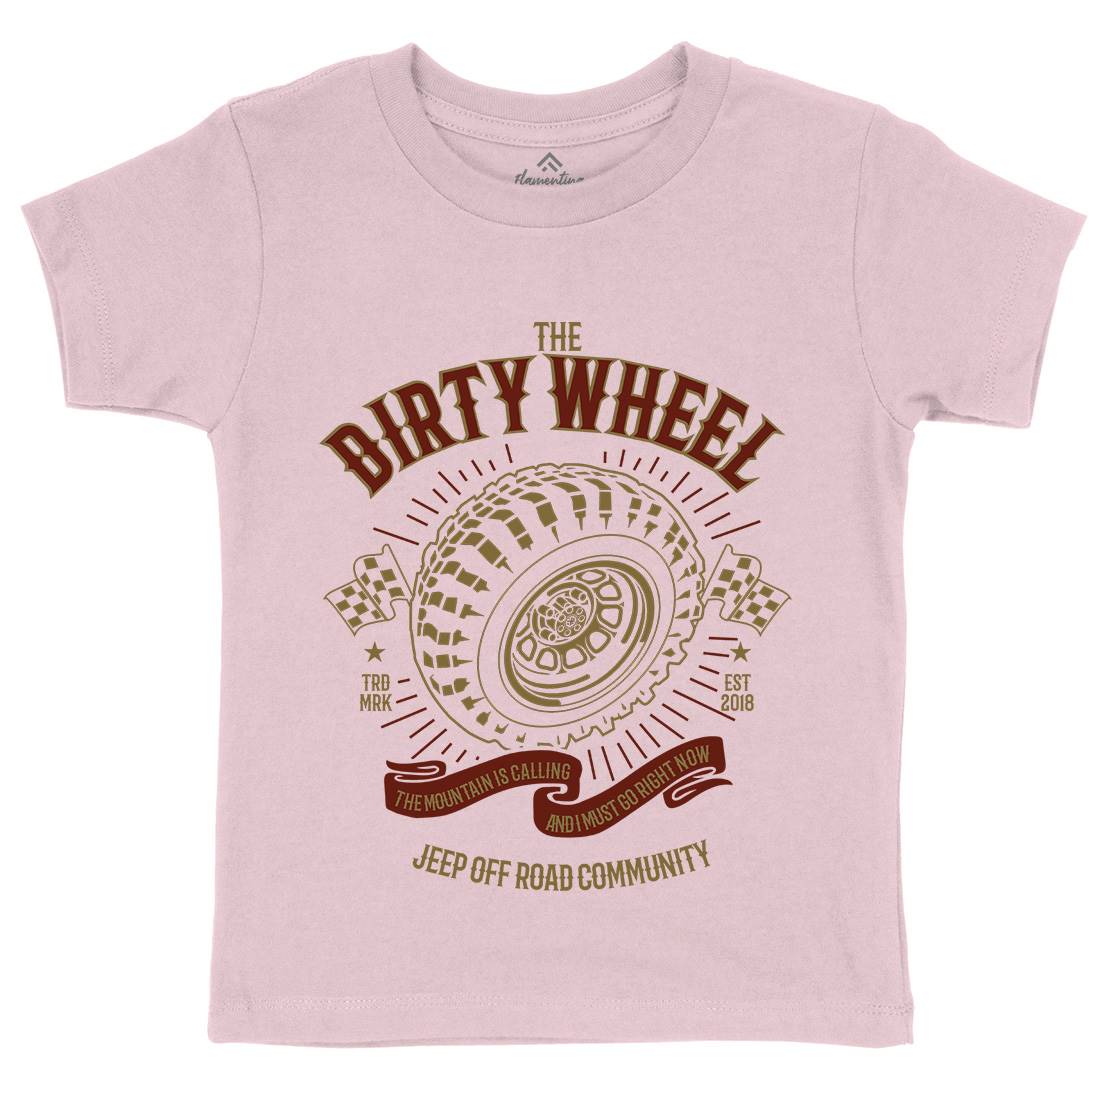 The Dirty Wheel Kids Crew Neck T-Shirt Cars B262